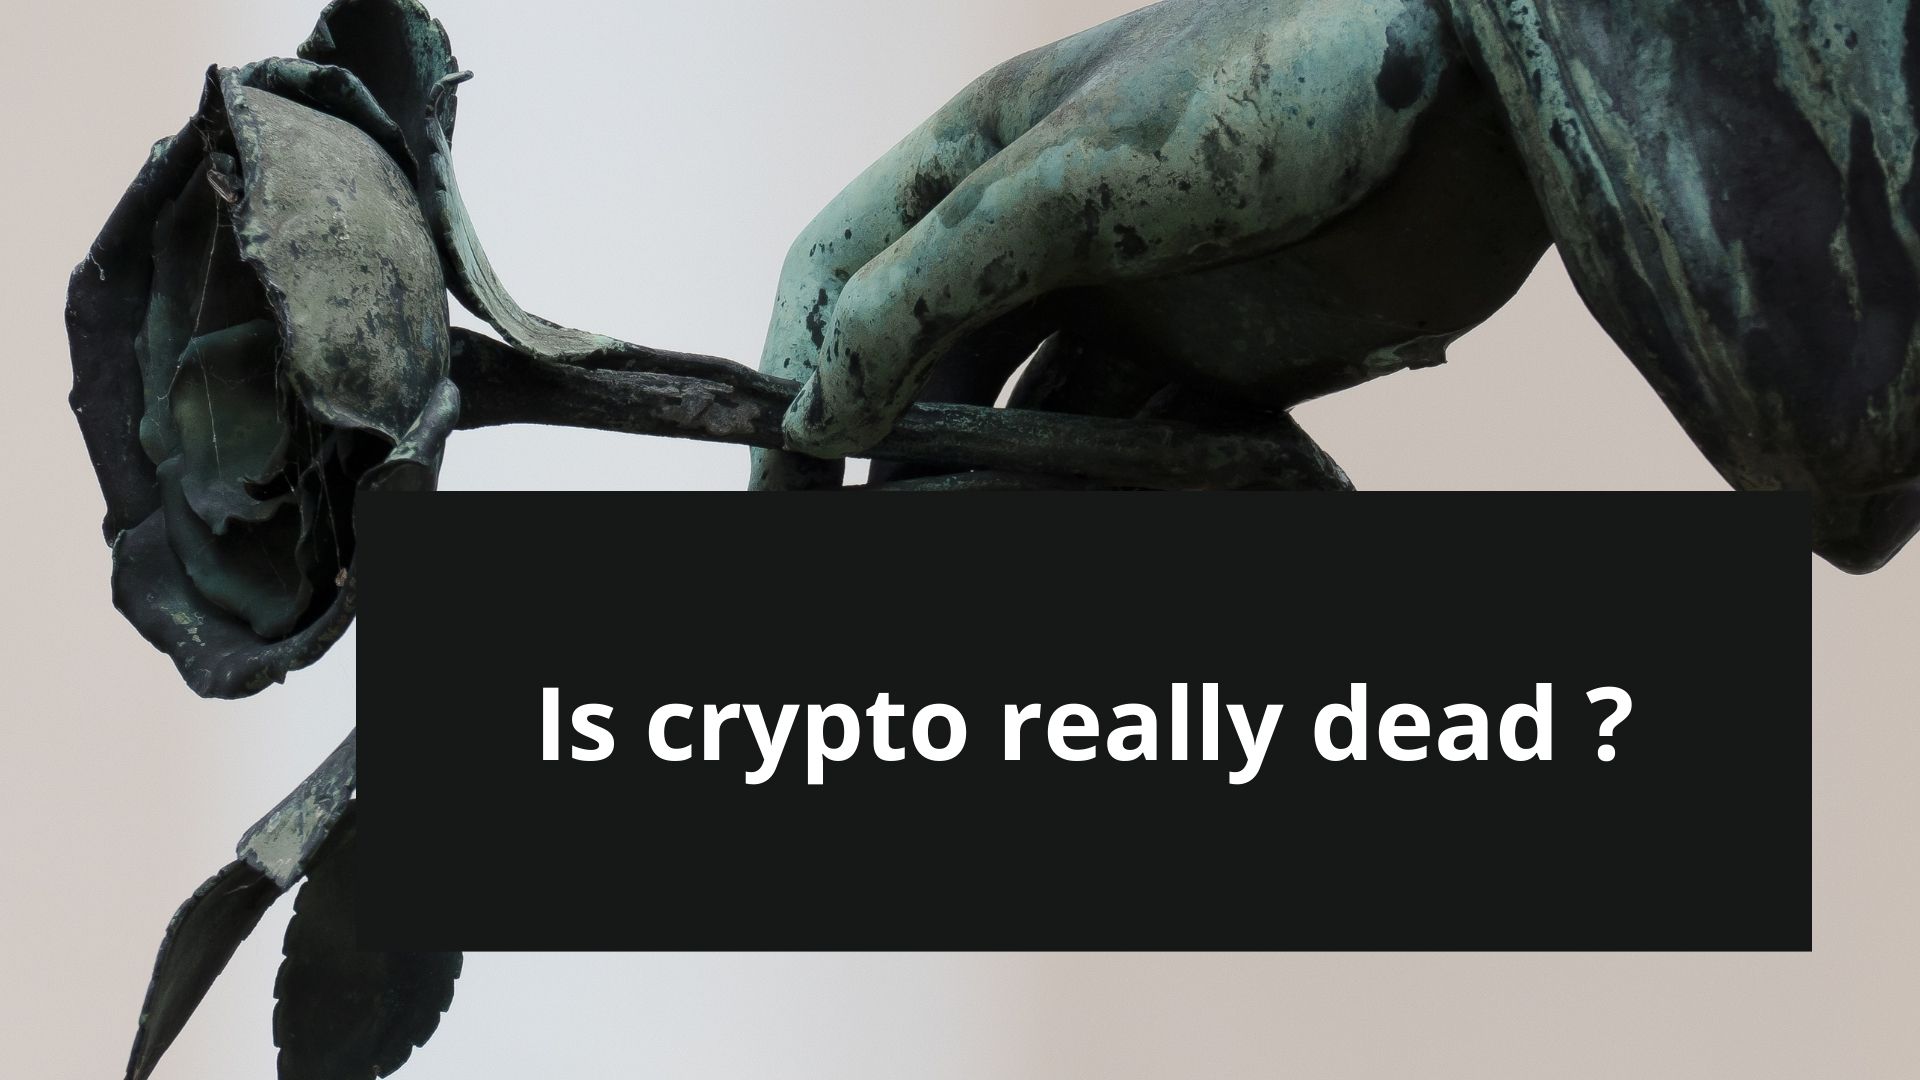 @achim03/is-crypto-really-dead